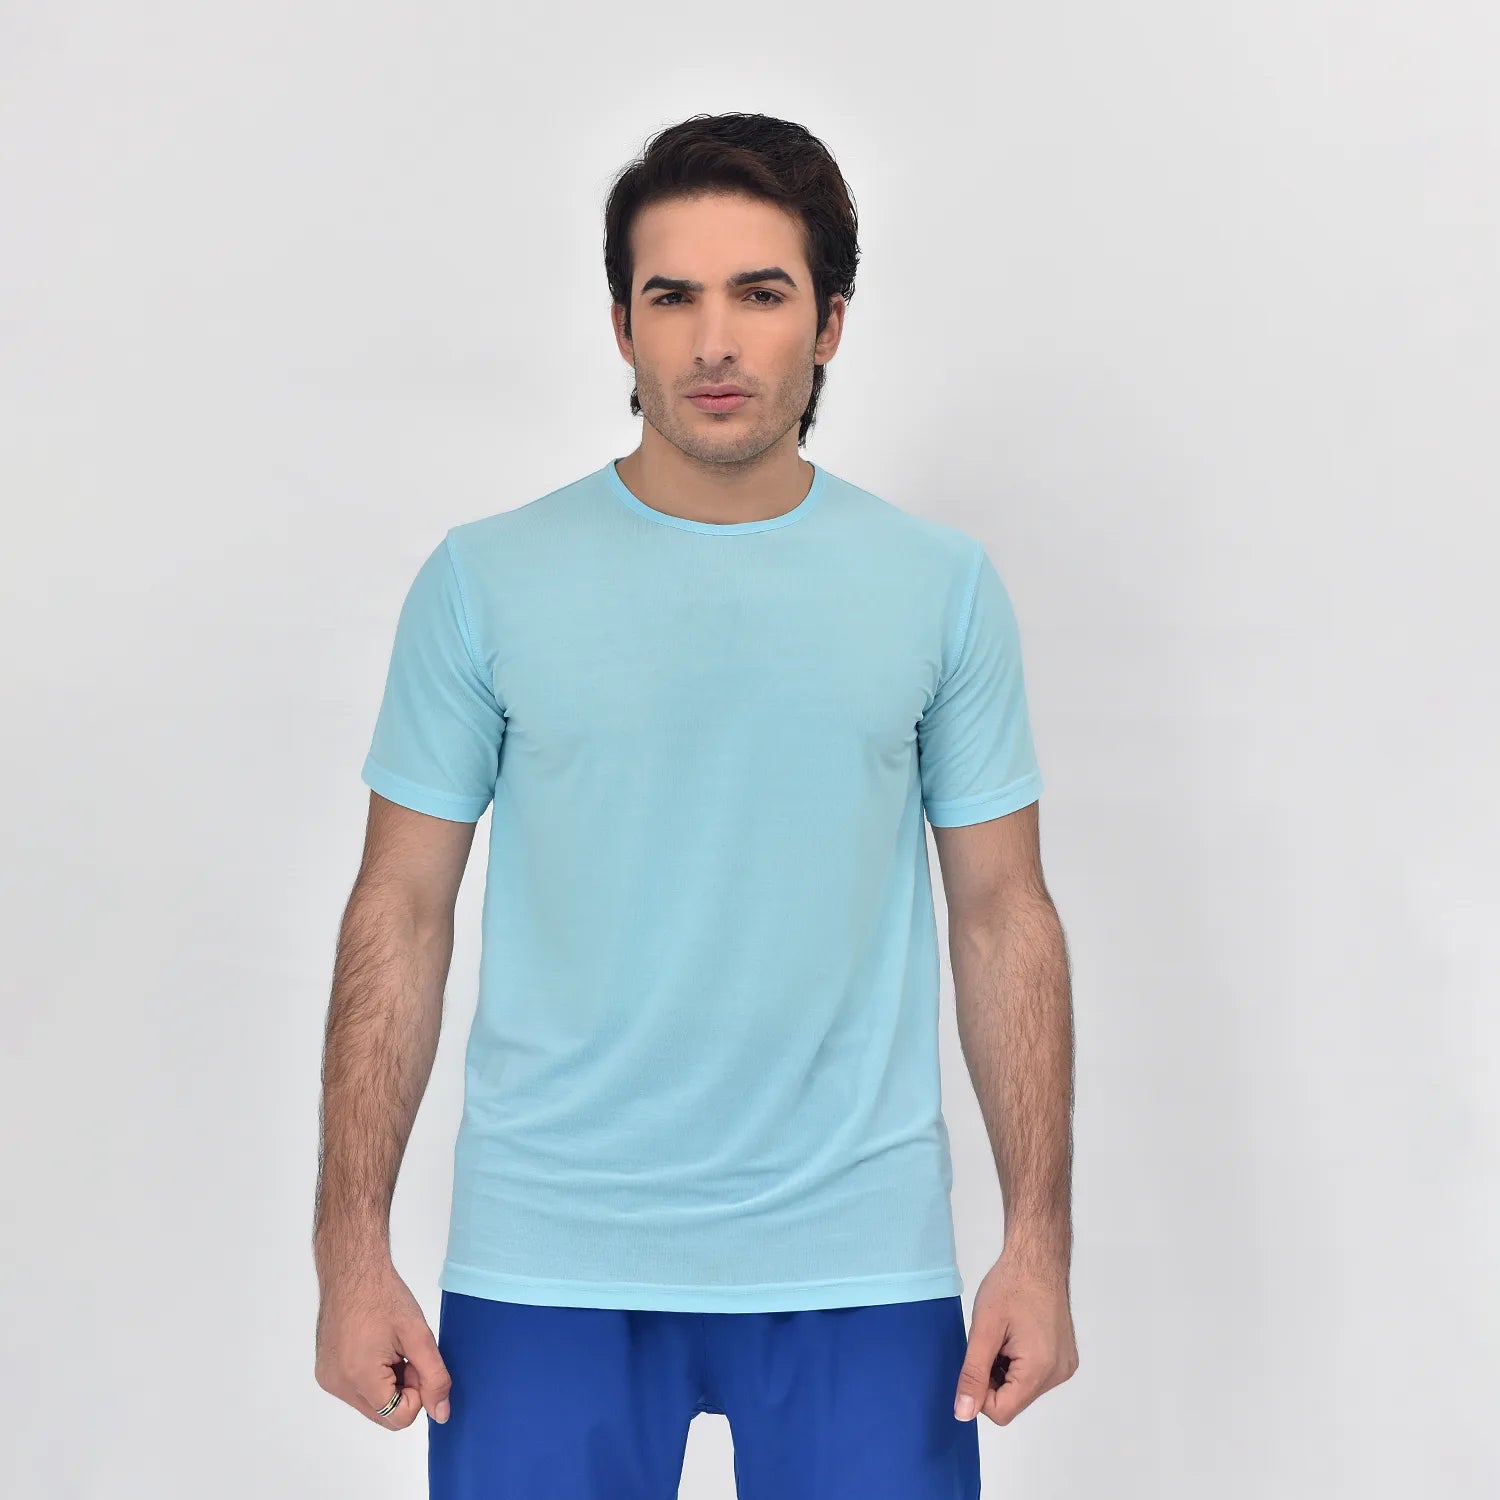 online tee shirts pakistan